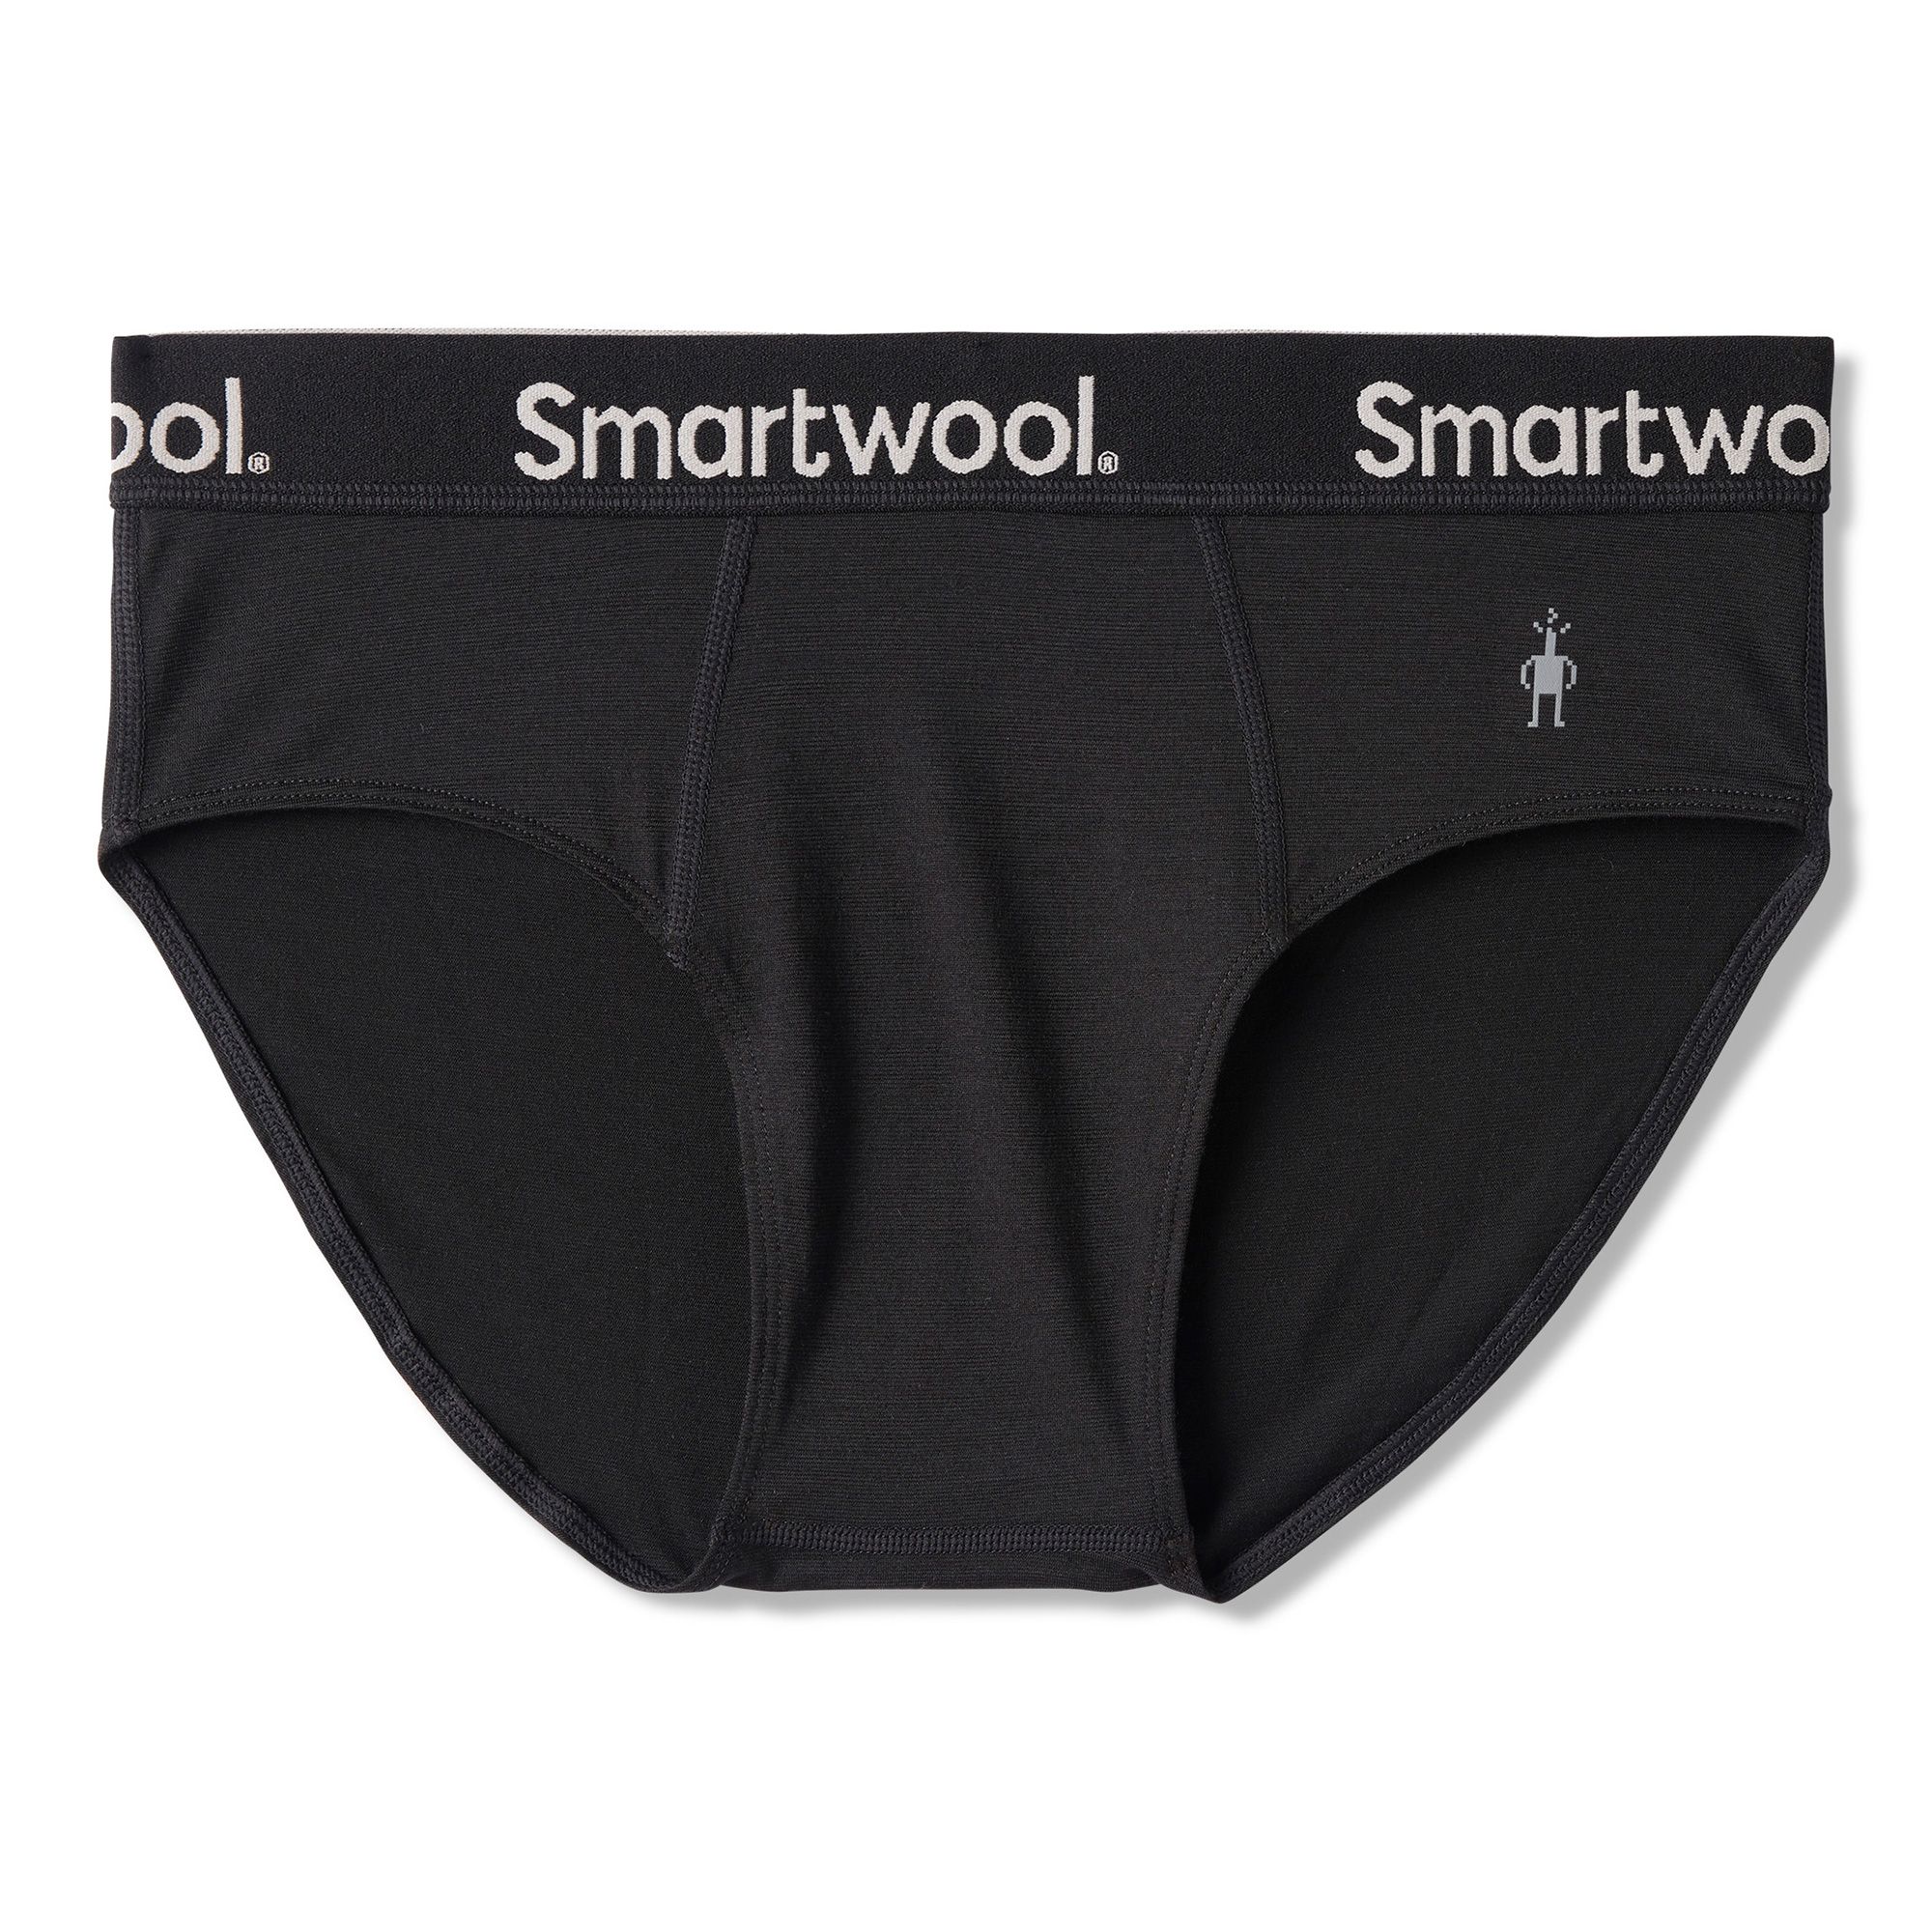 Smartwool Men's Underwear